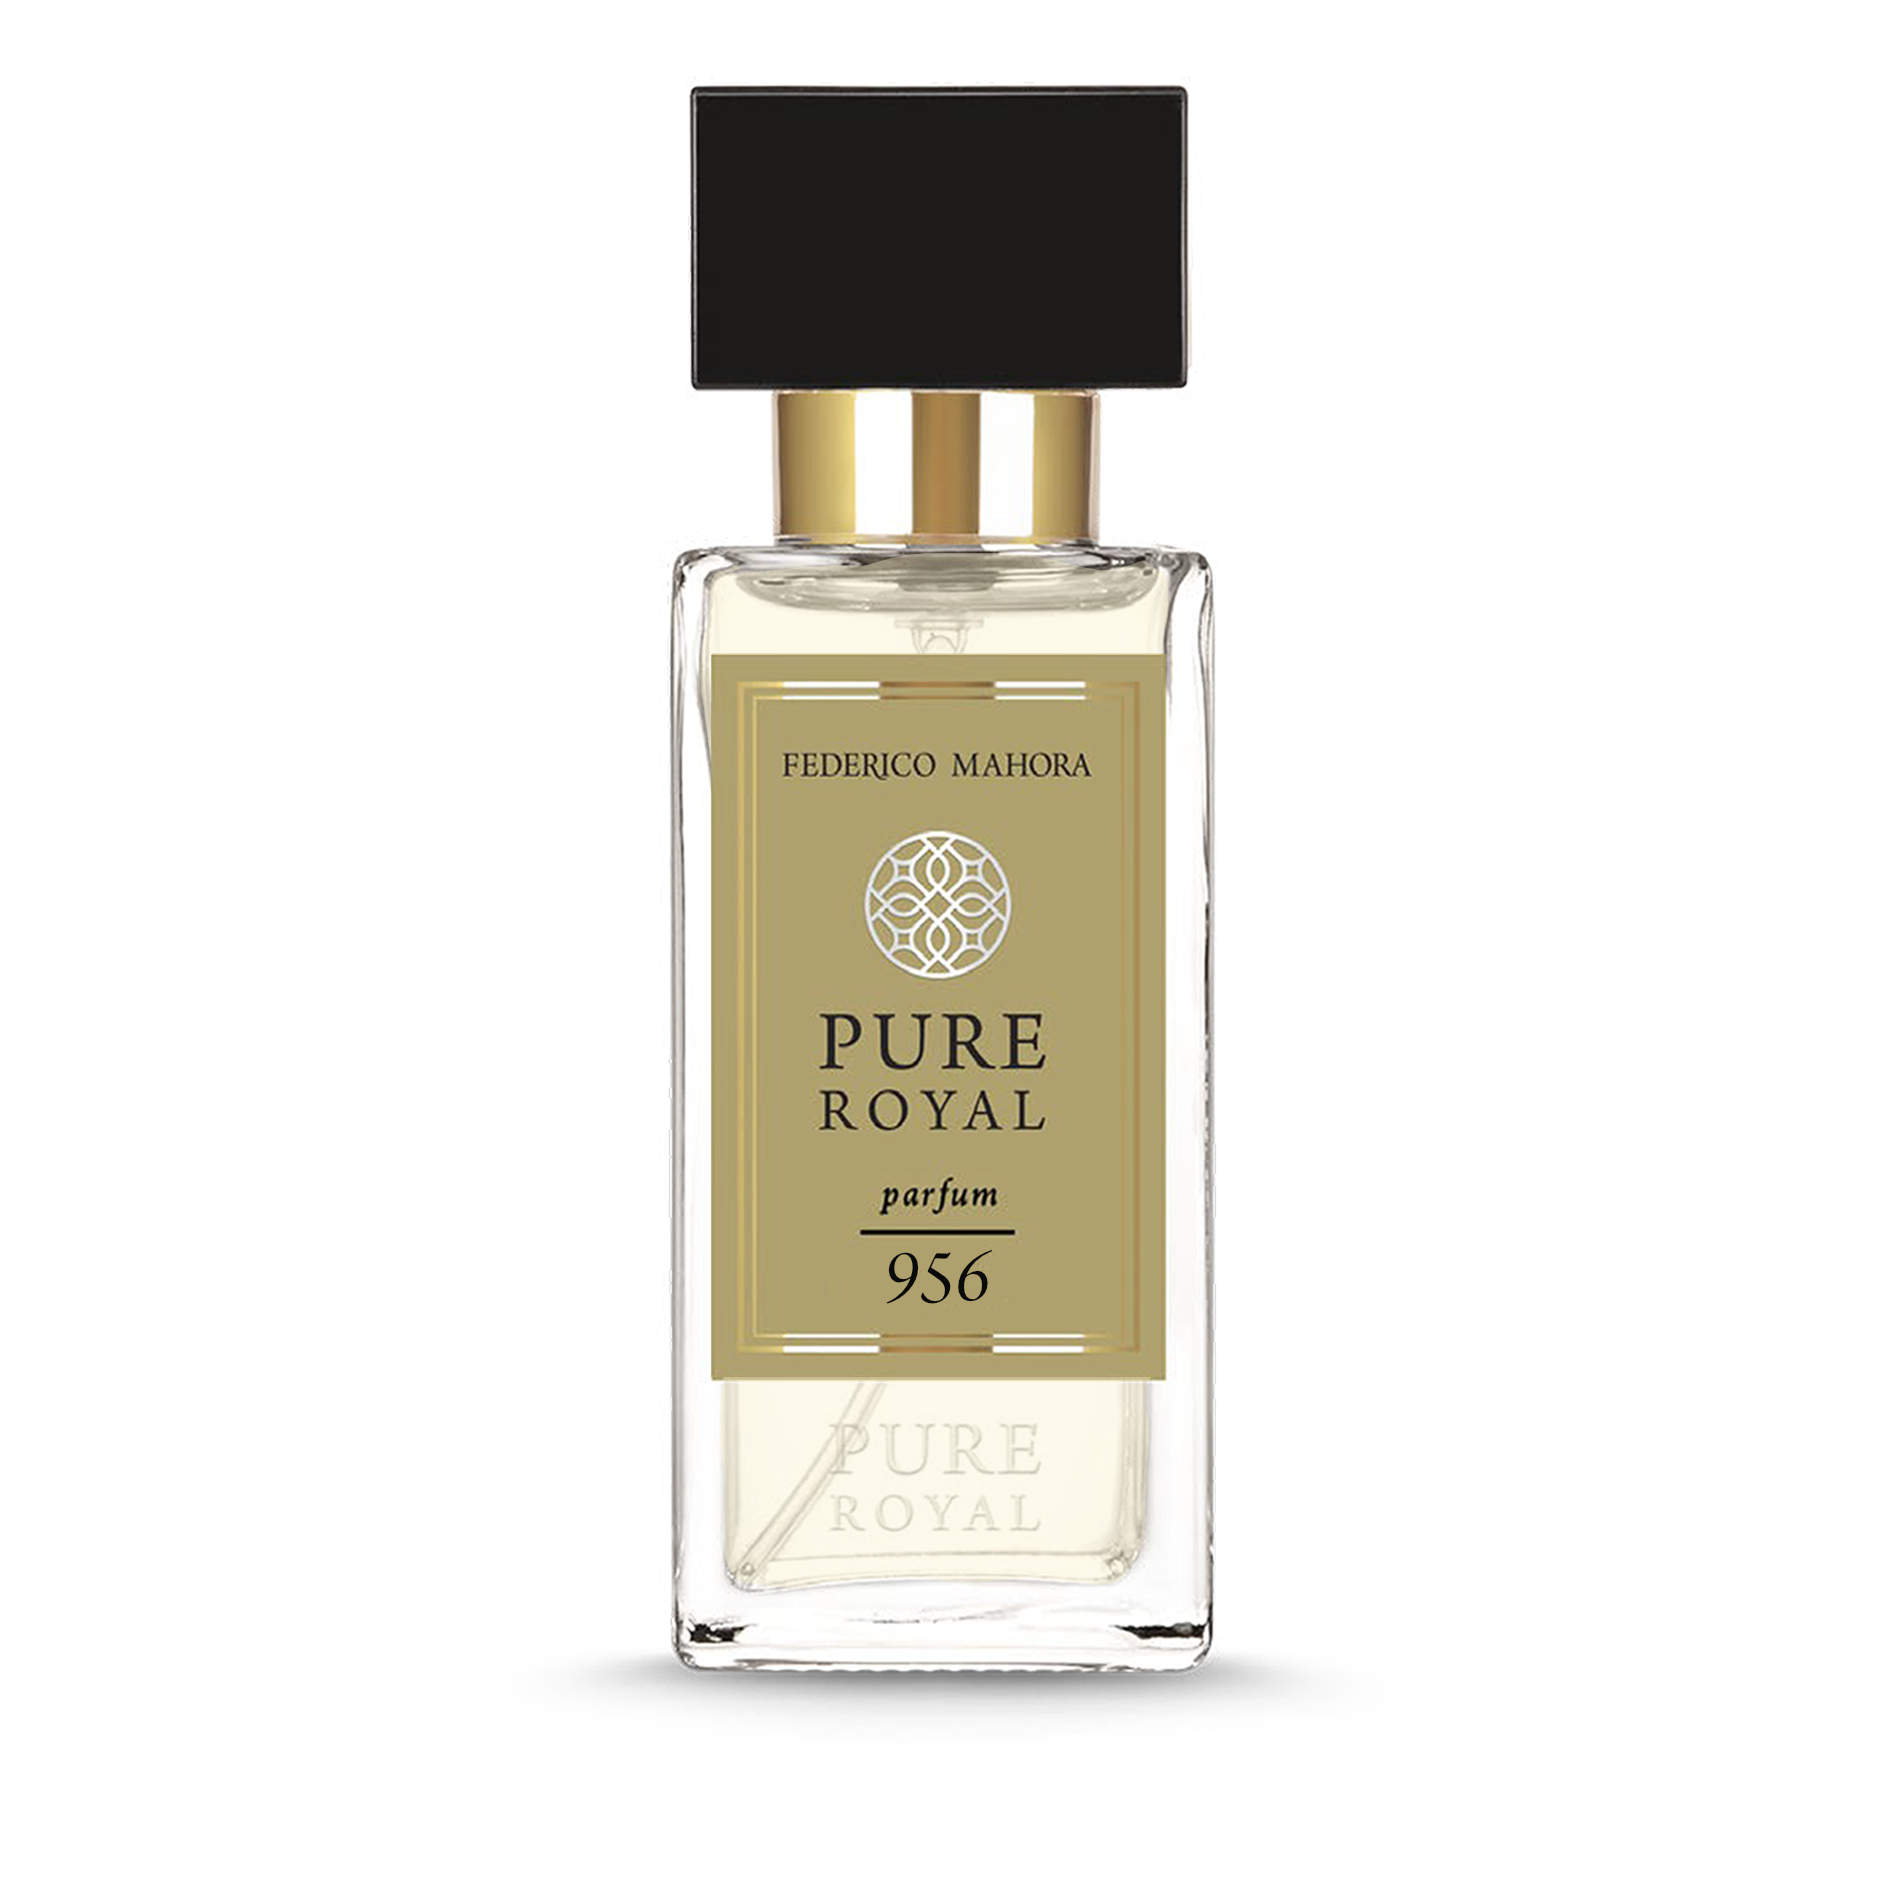 PURE ROYAL 956 Parfum Federico Mahora